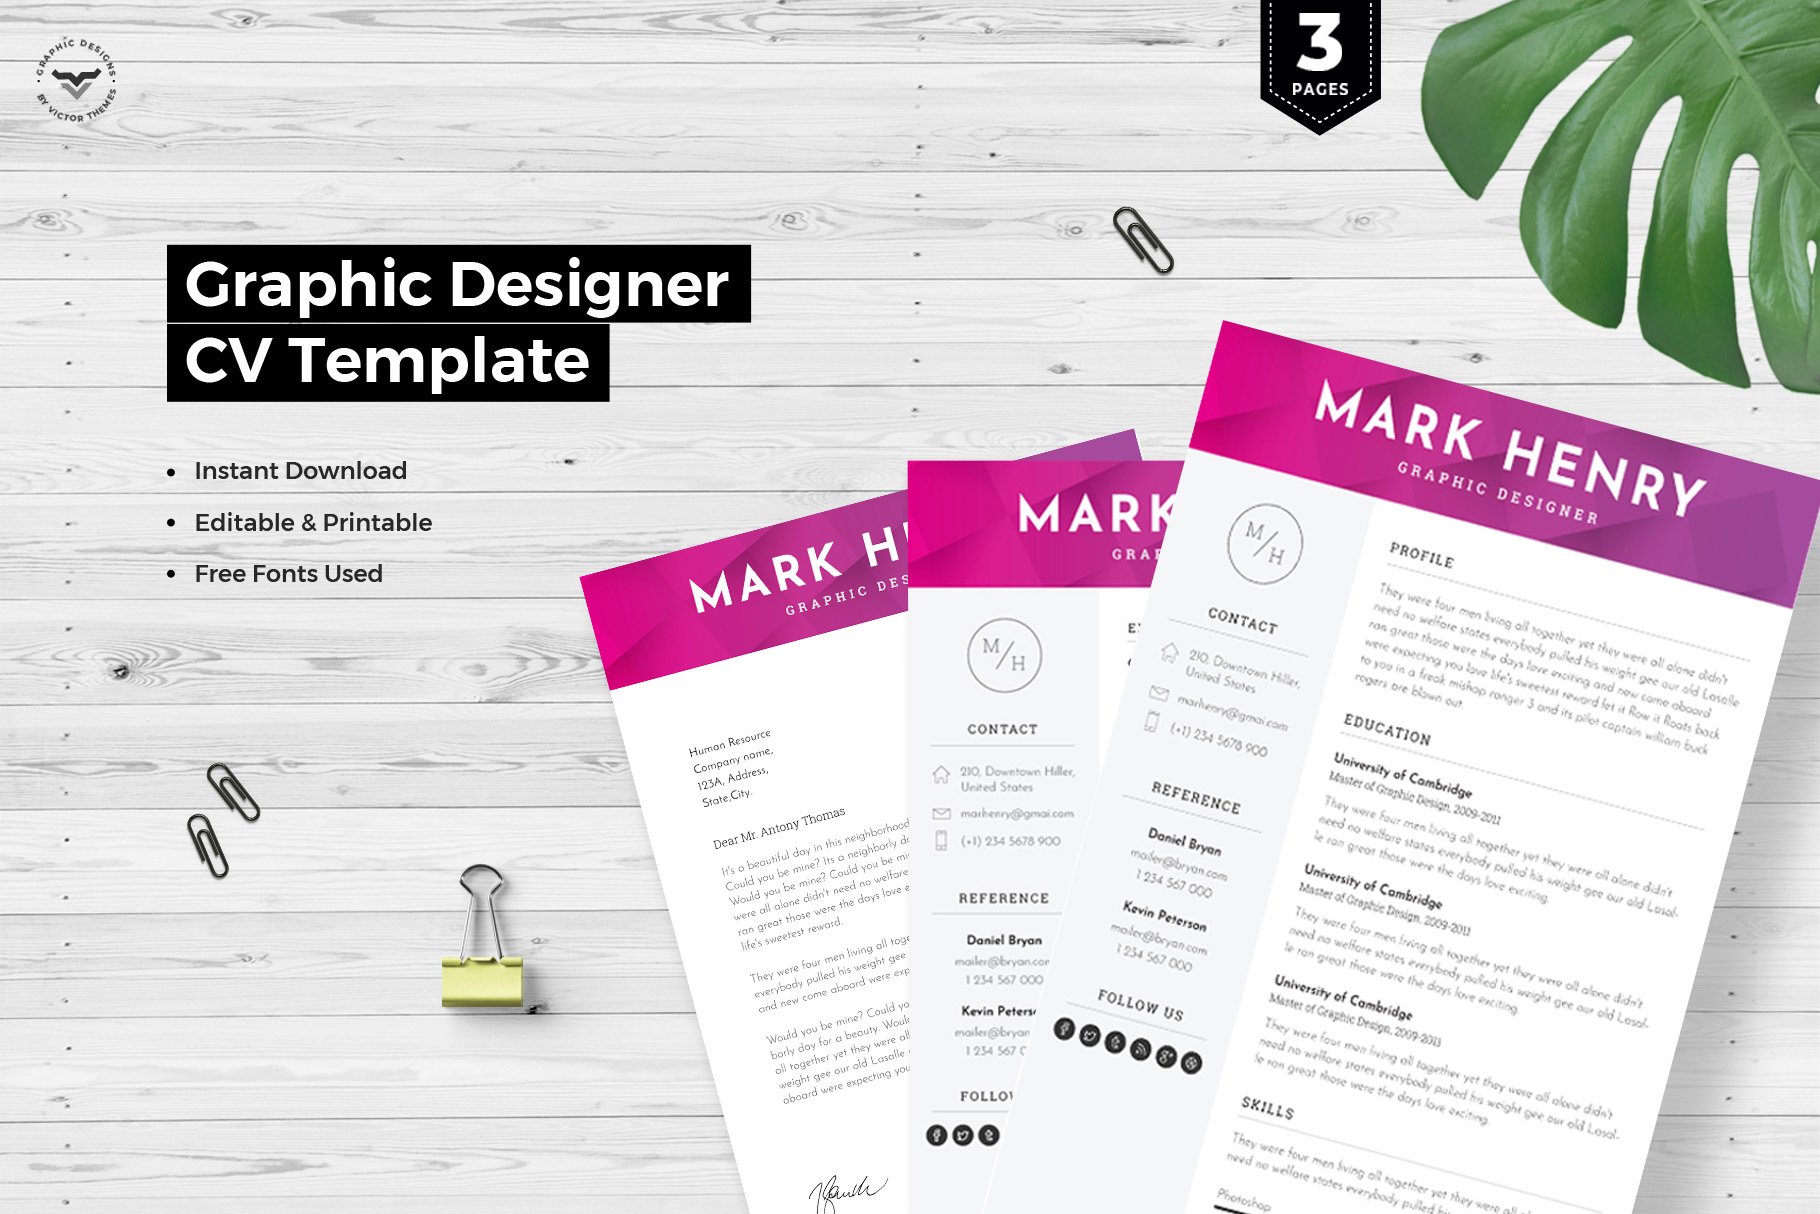 Graphic Designer CV Template cover image.